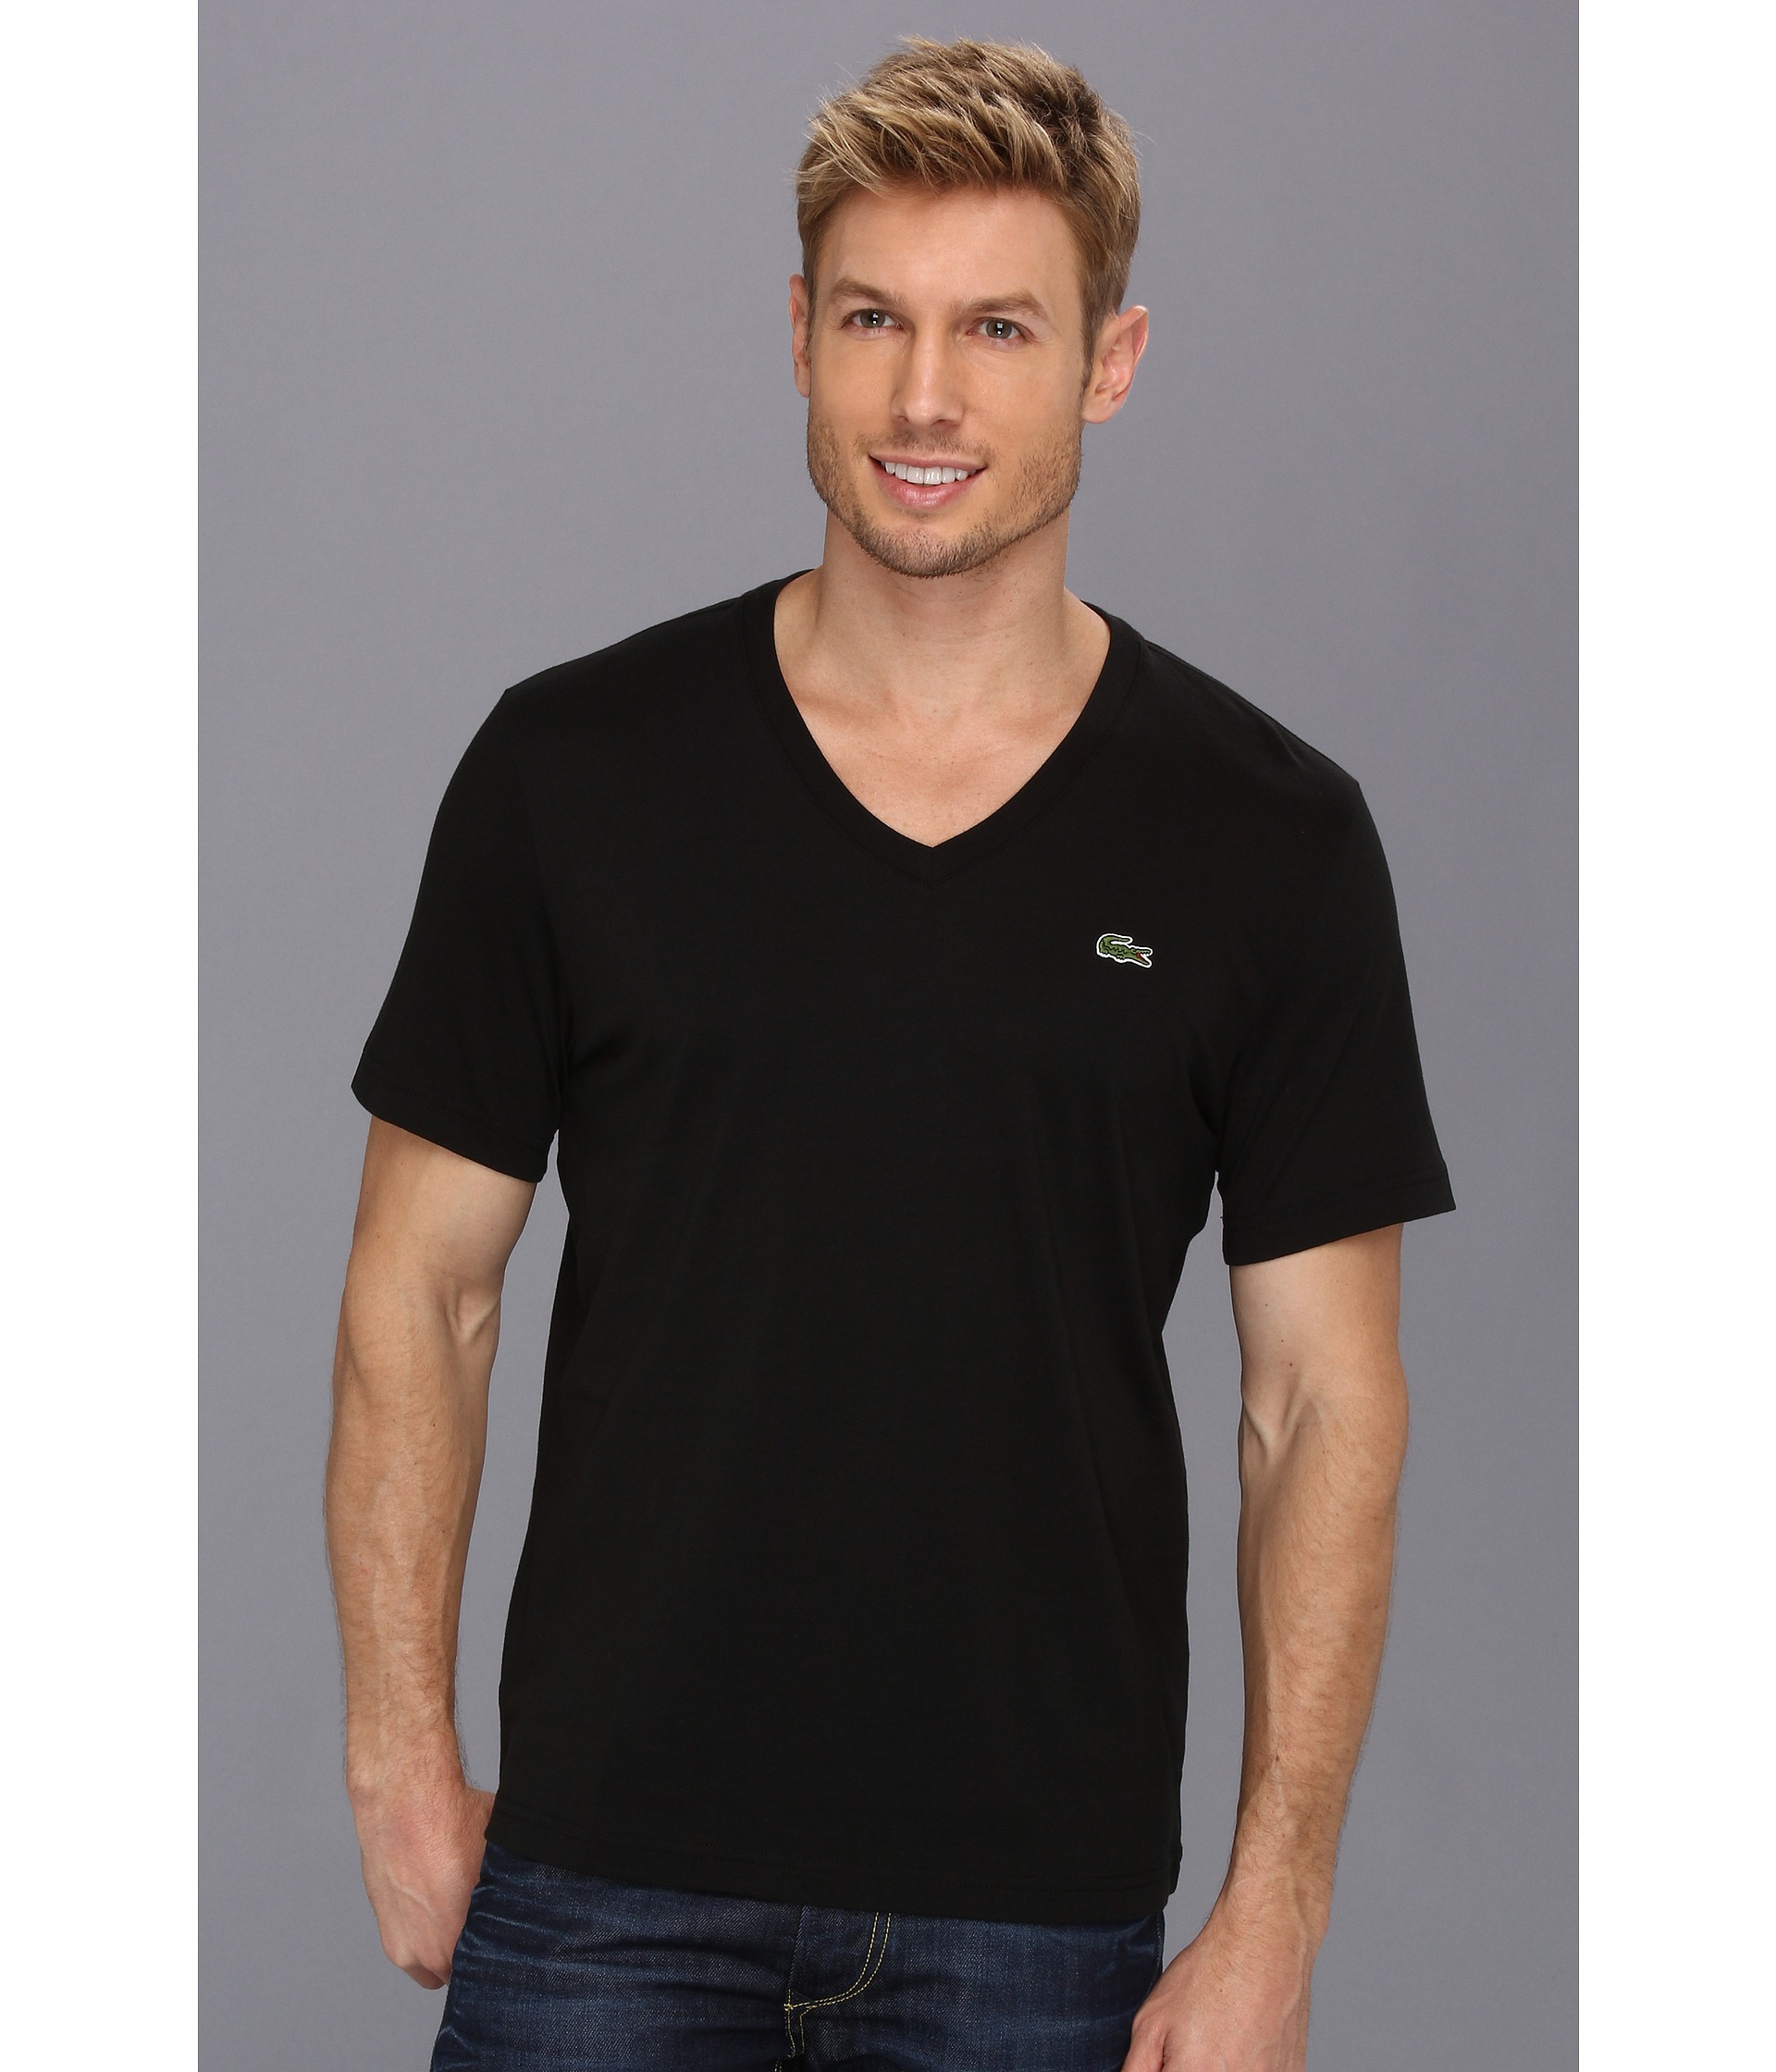 Lacoste Shirt V Neck Flash Sales, 53% OFF | centro-innato.com